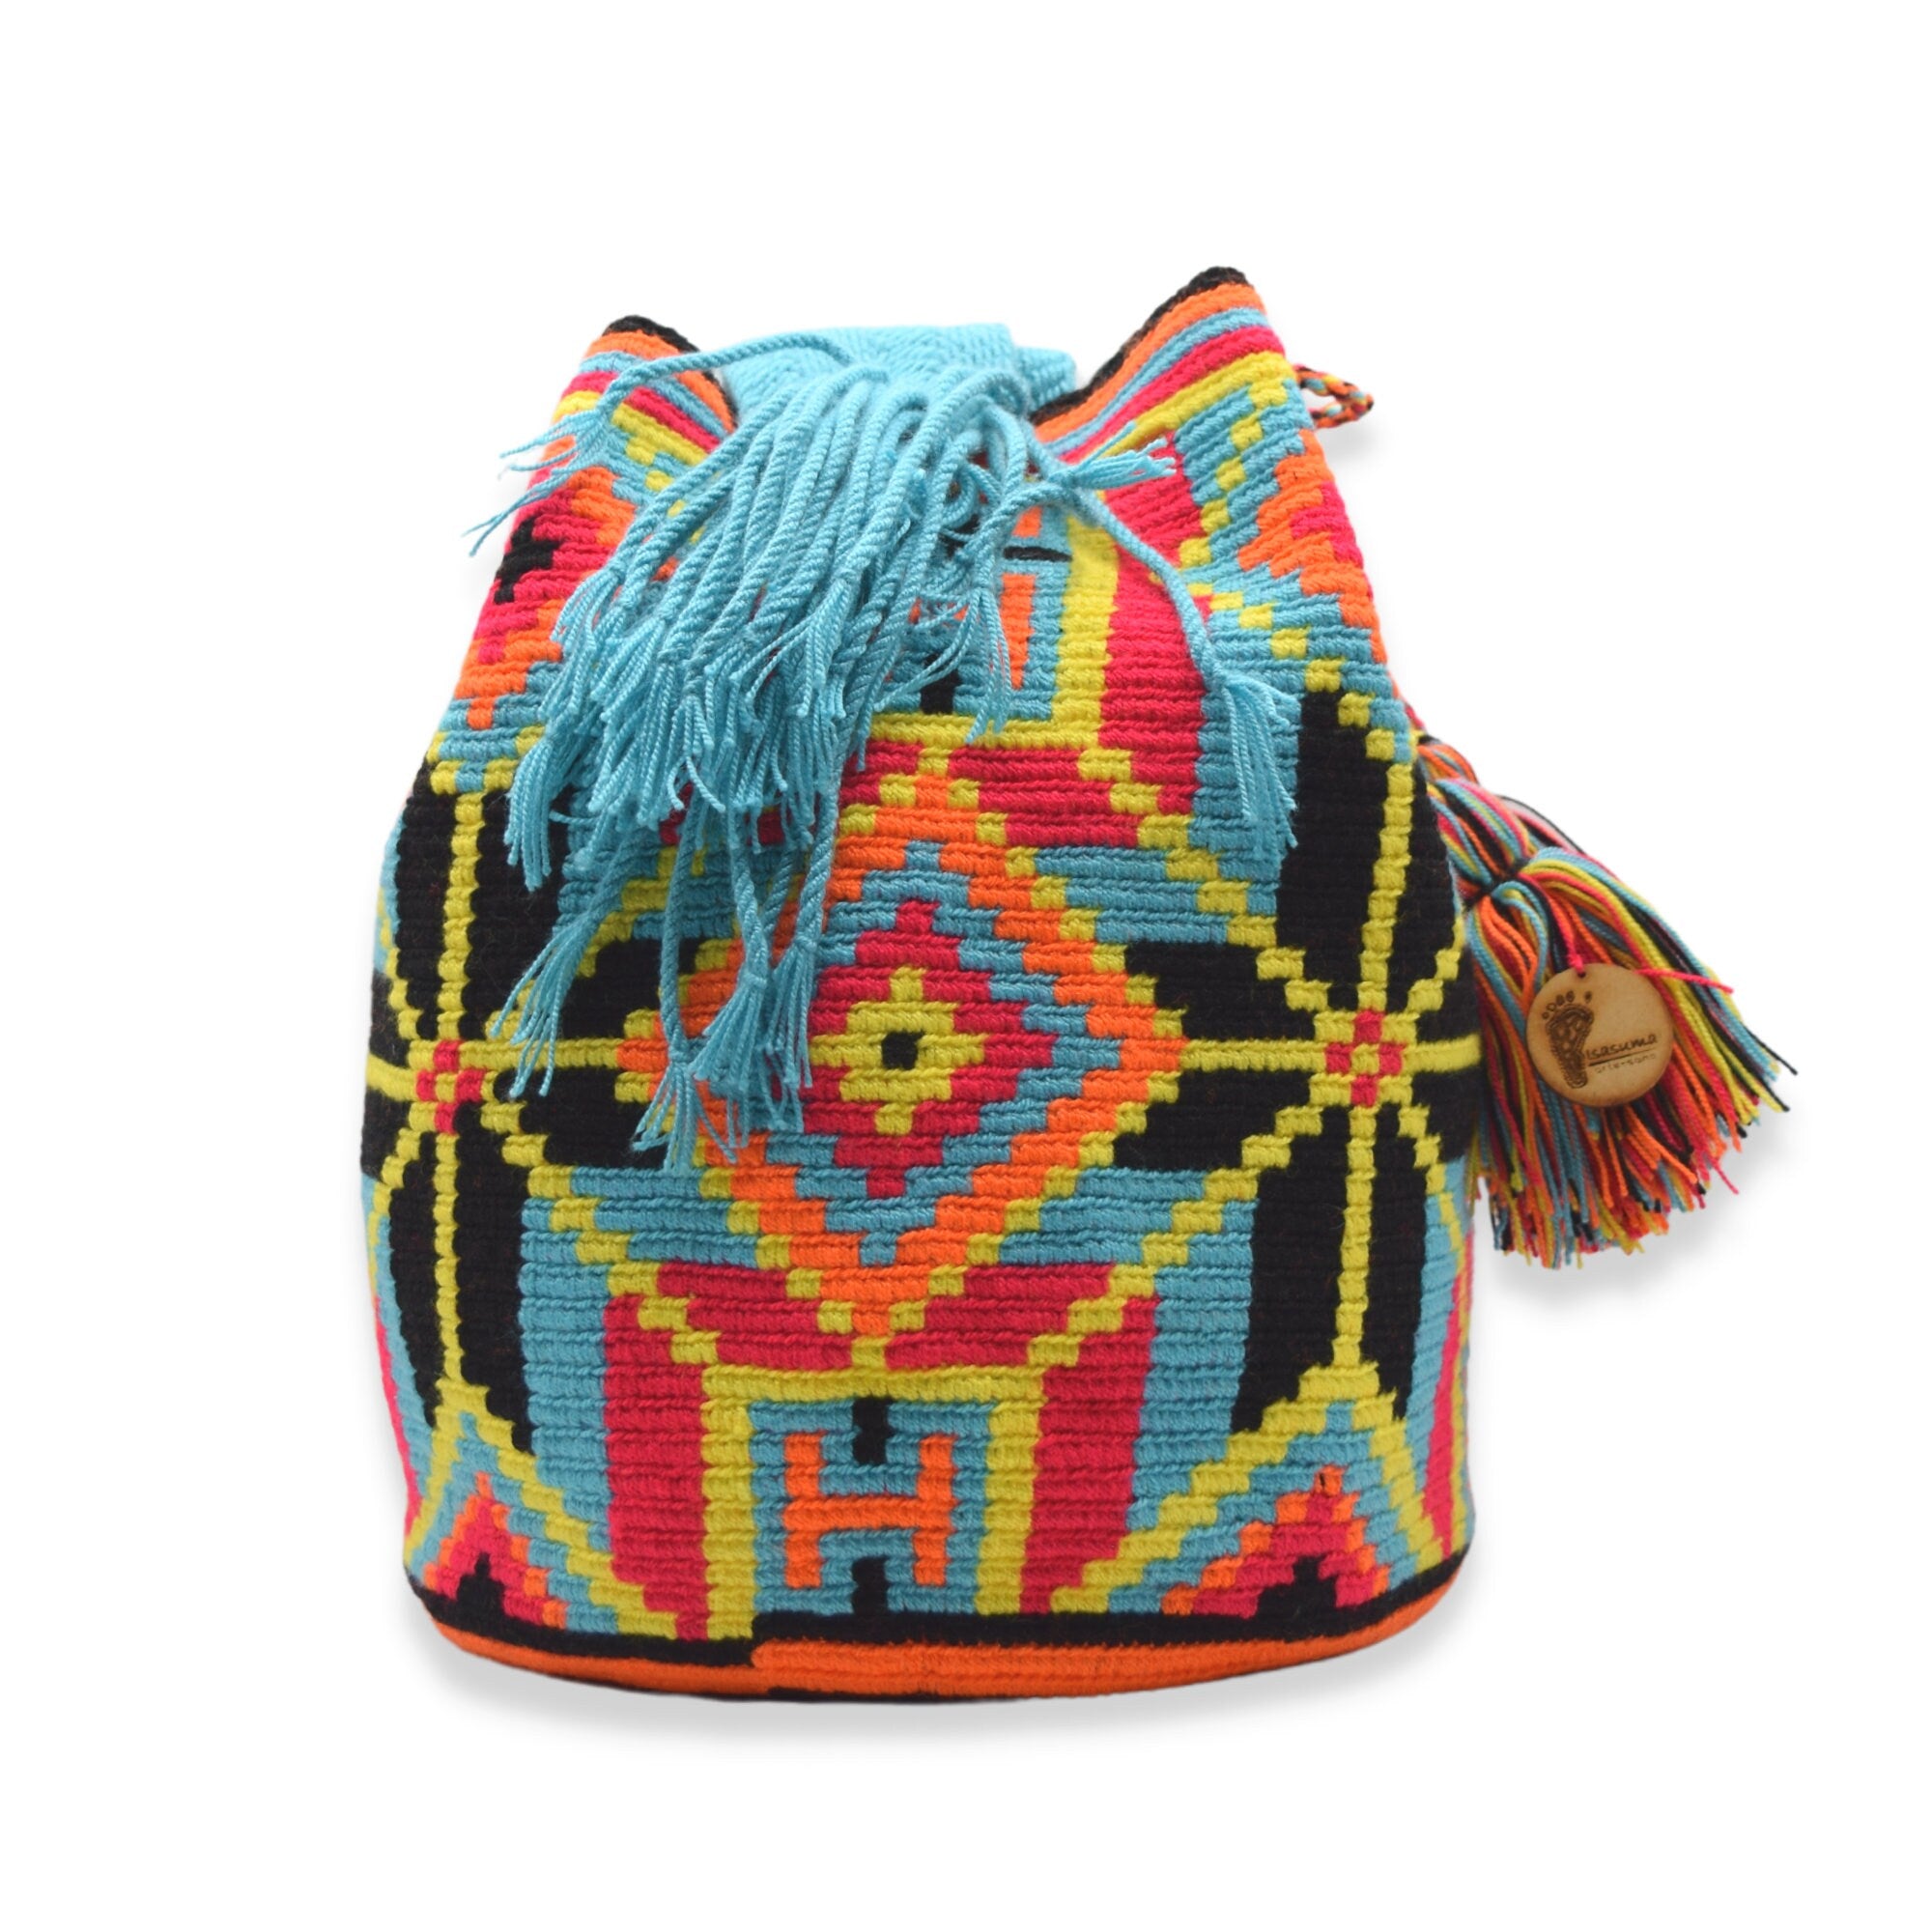 Wayuu mochila bag | Large Tradicional | Blue and black, orange neon